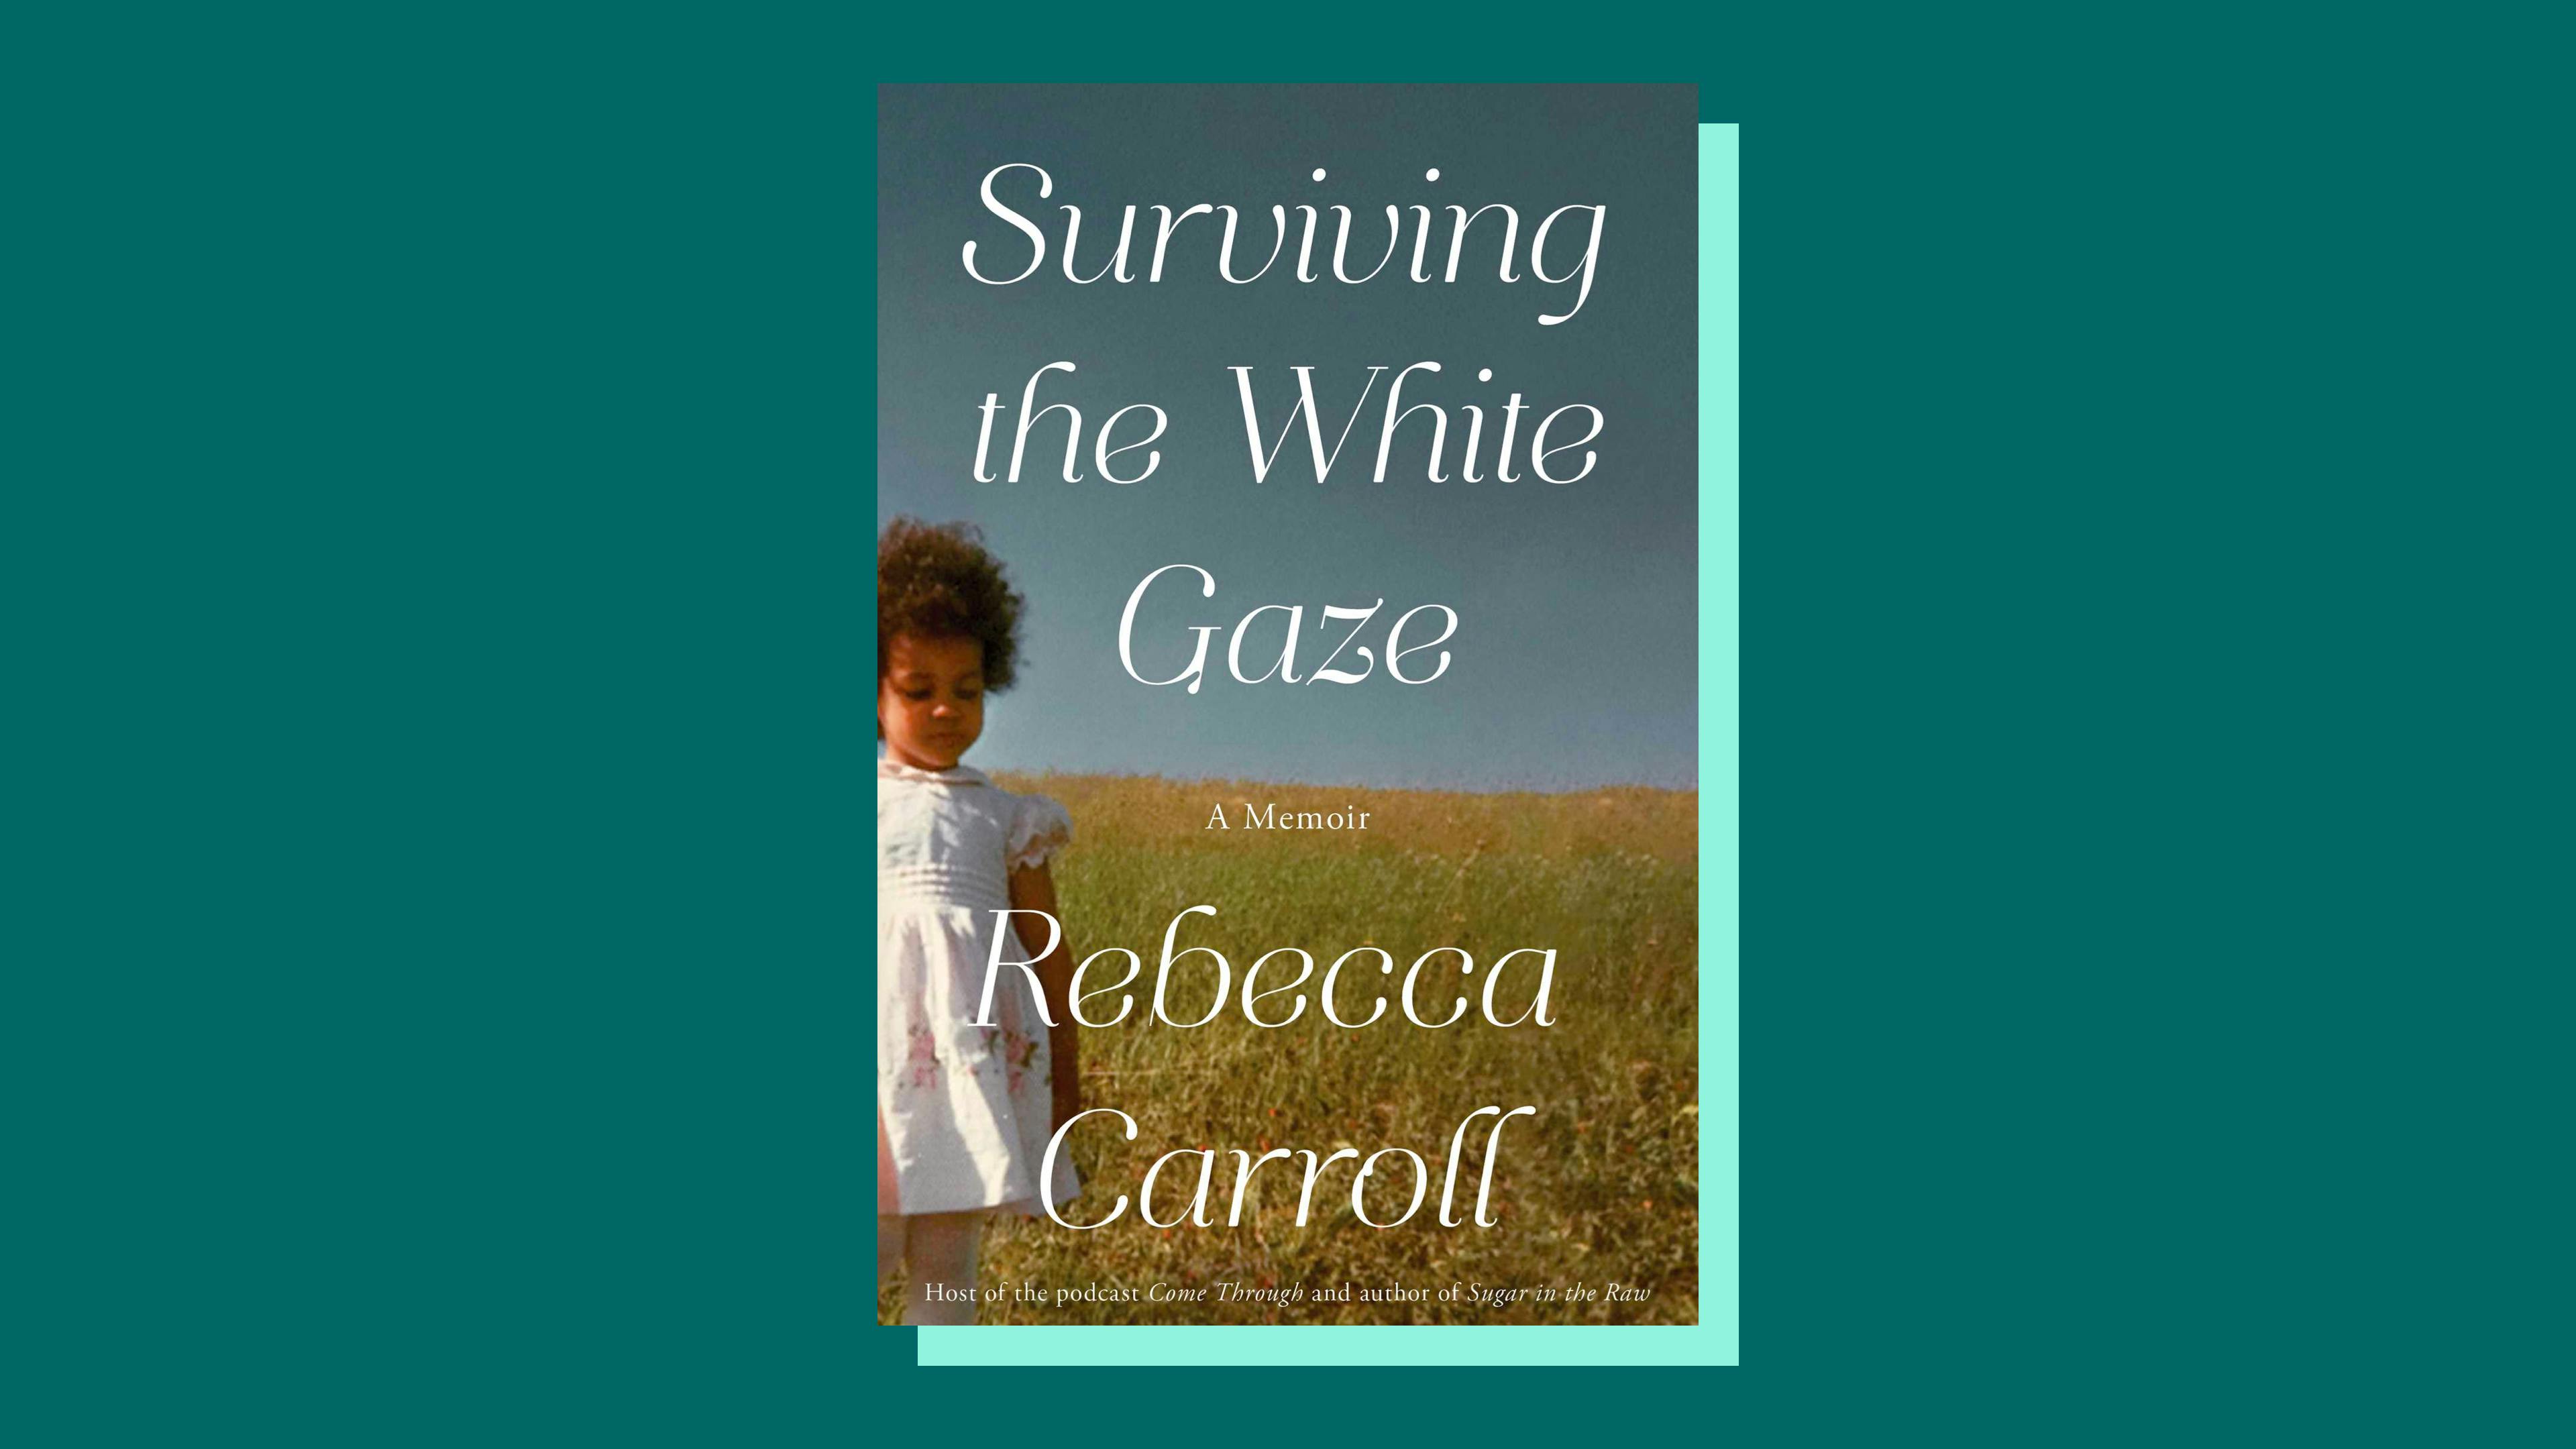 “Surviving the White Gaze” by Rebecca Carroll 